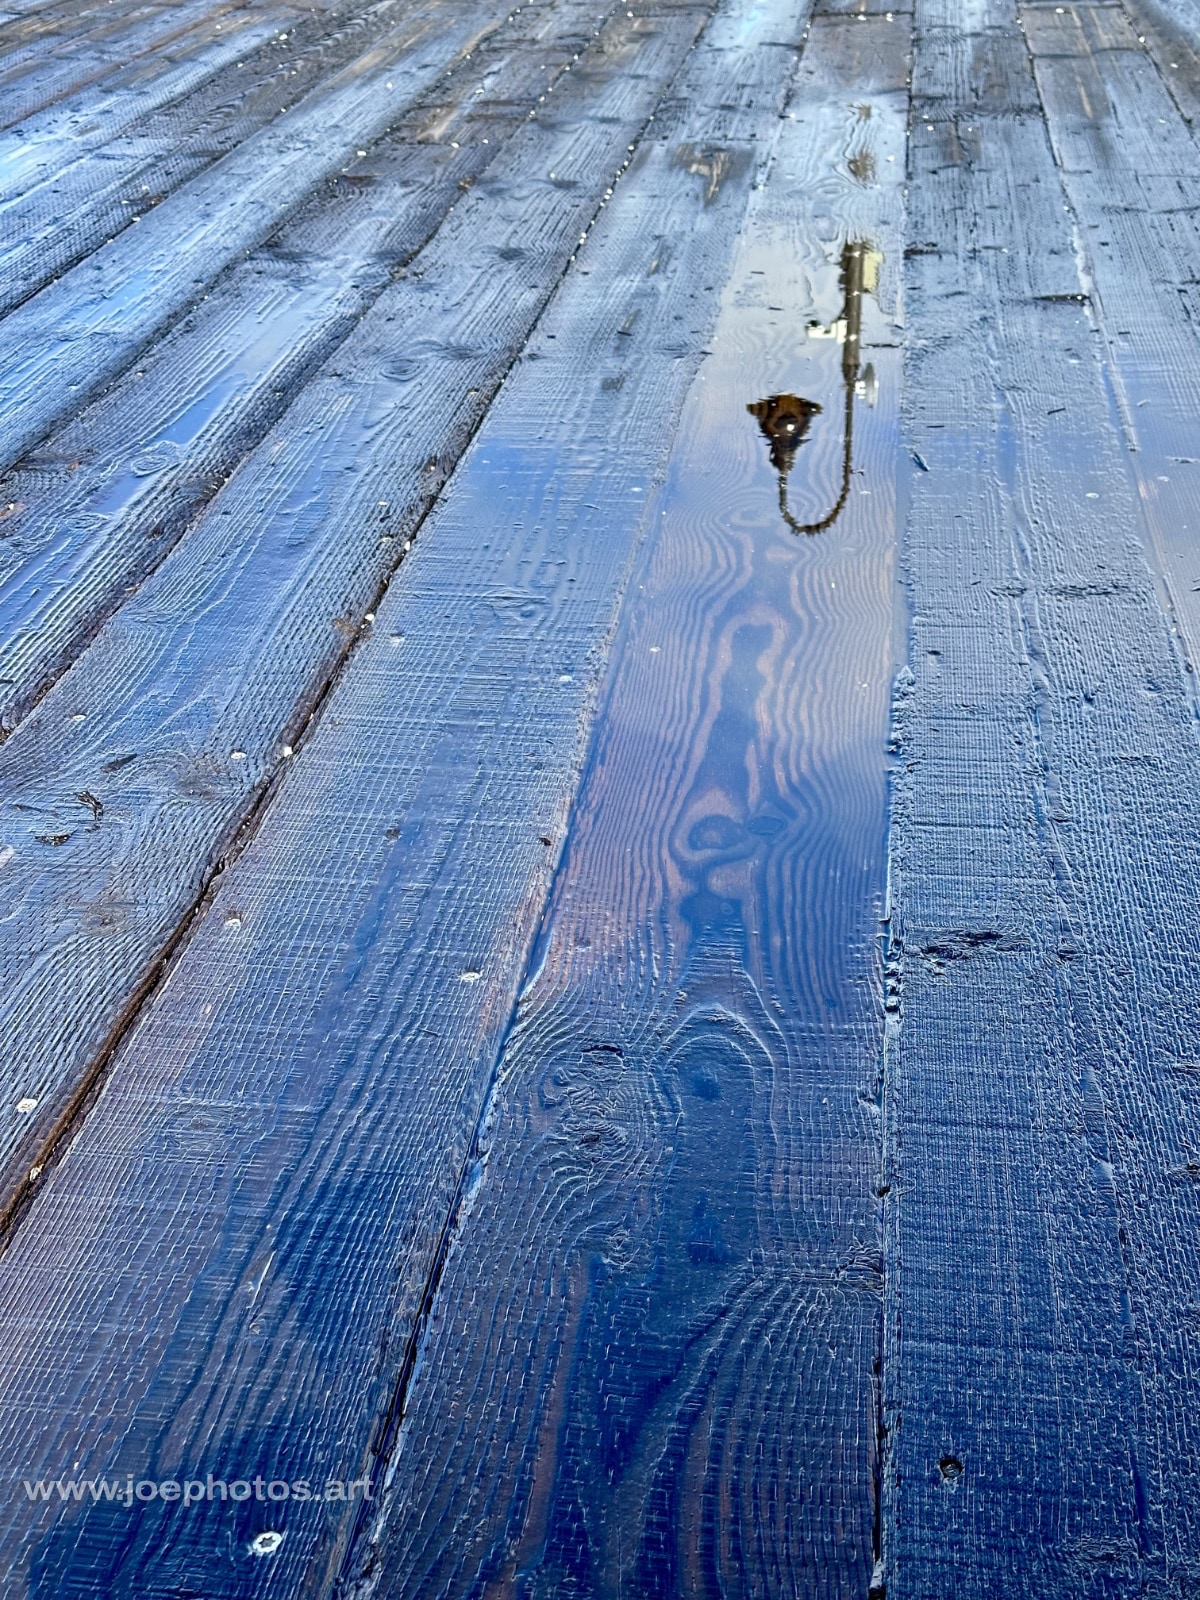 Reflective rain puddle on wood.